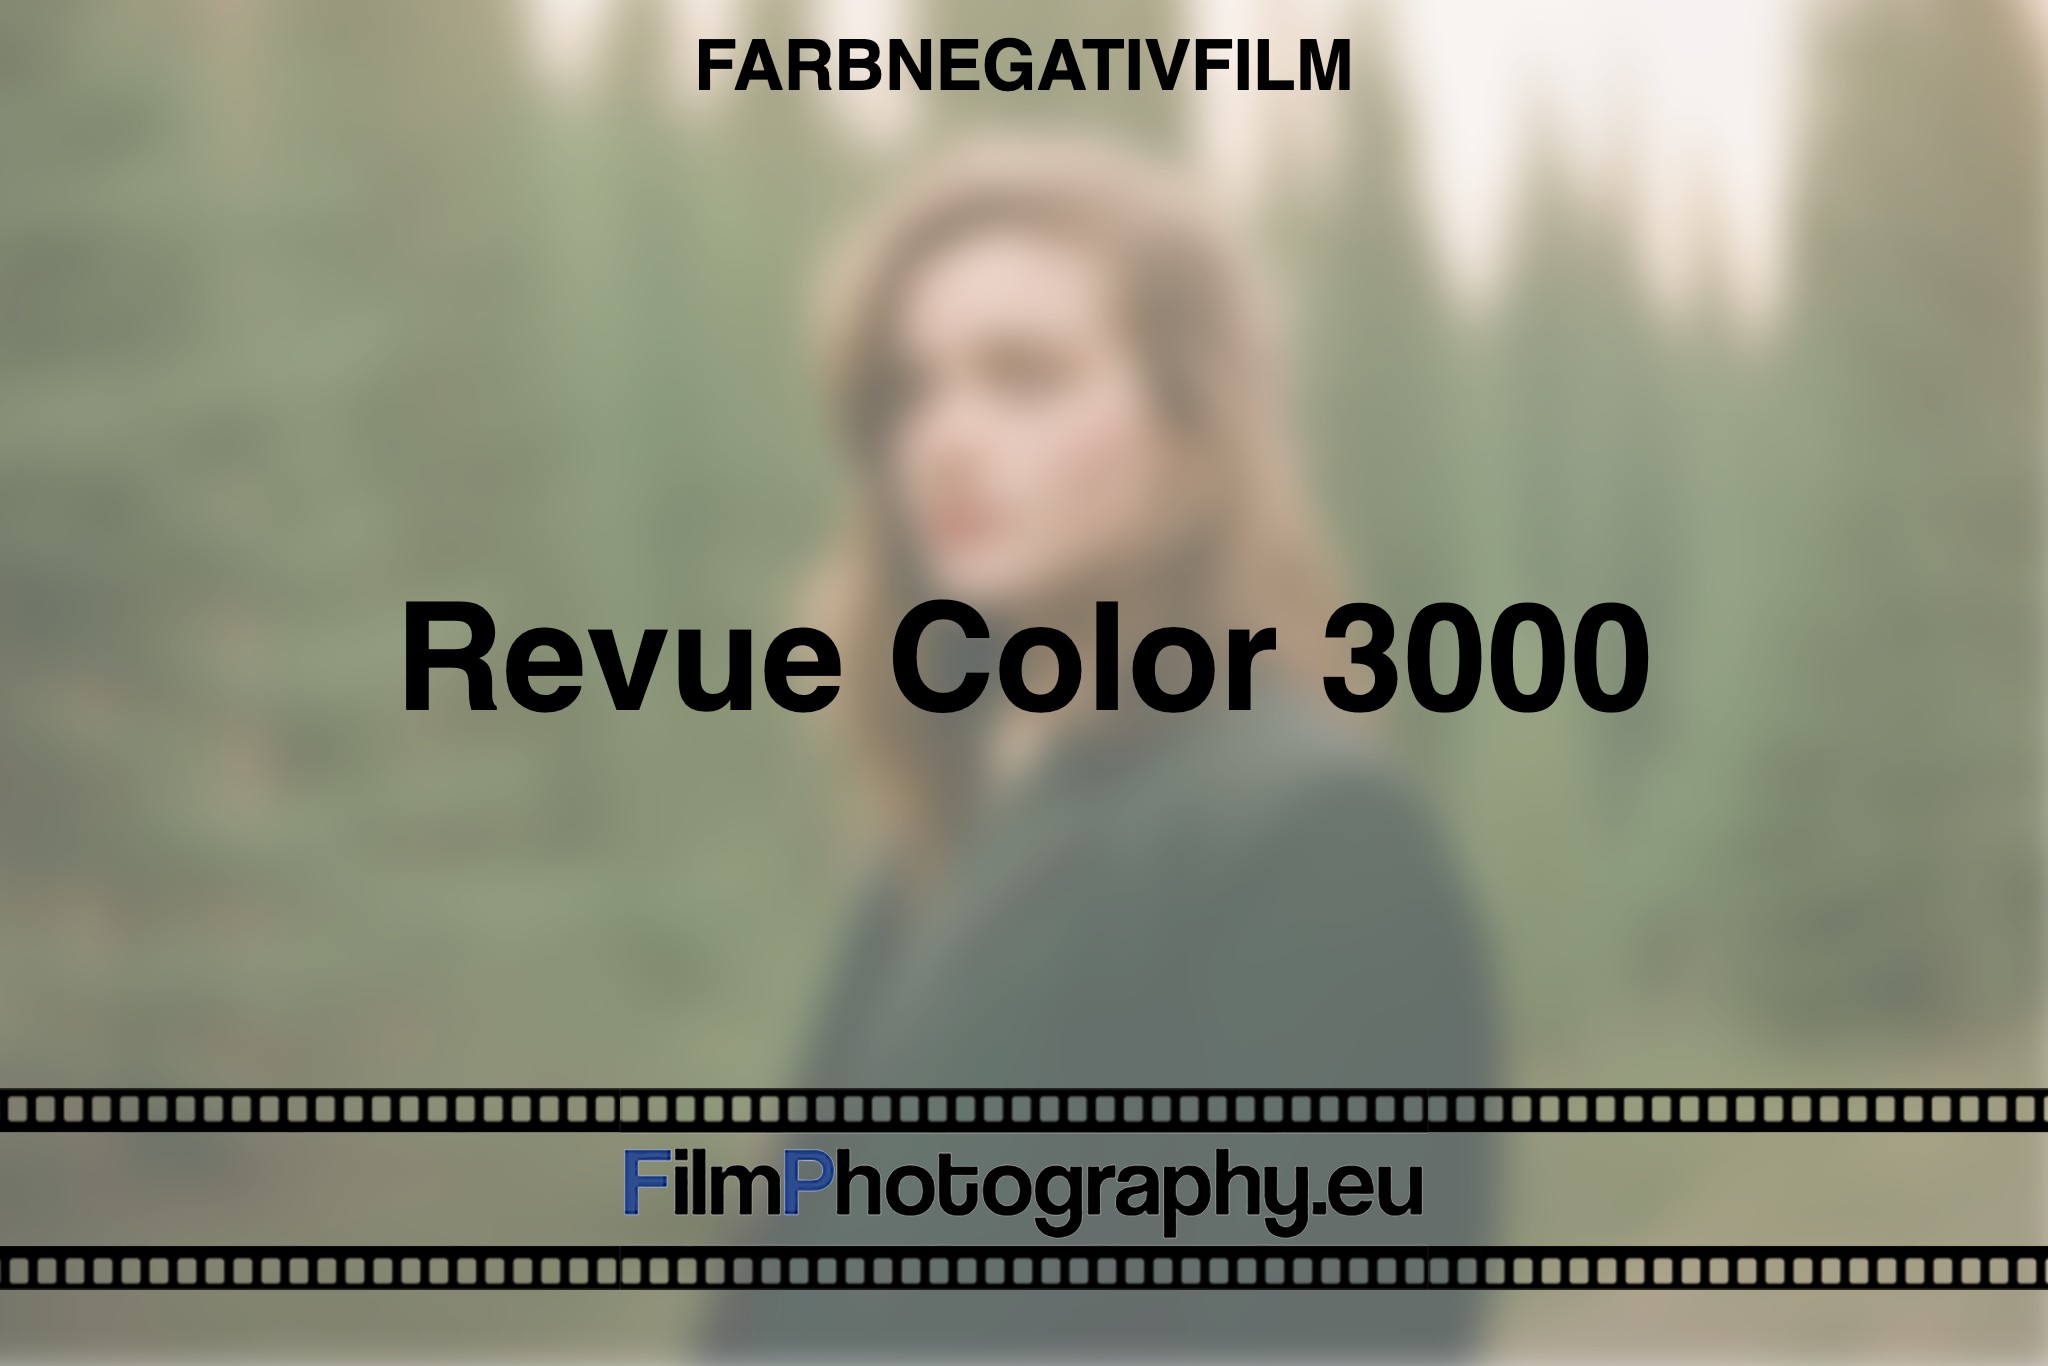 revue-color-3000-farbnegativfilm-bnv